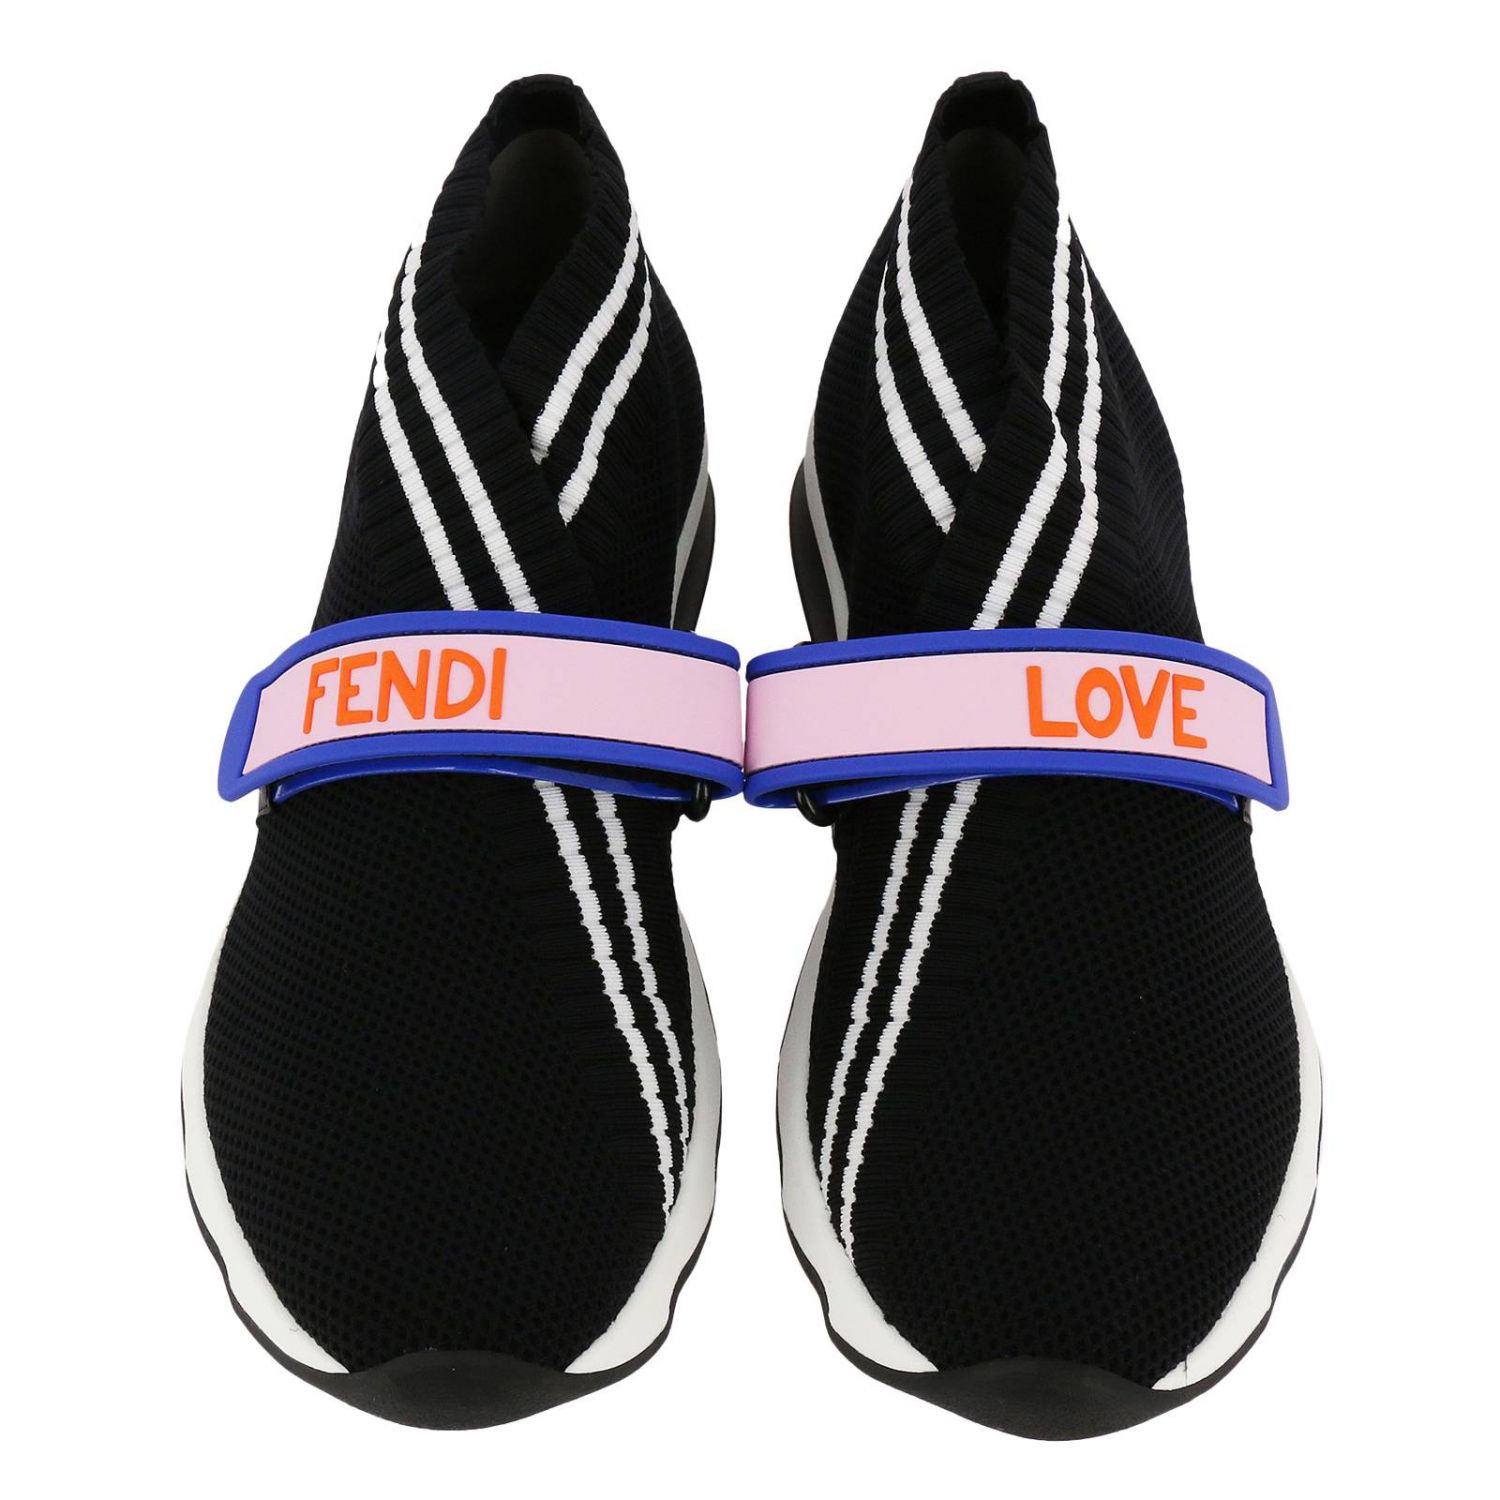 fendi shoes love